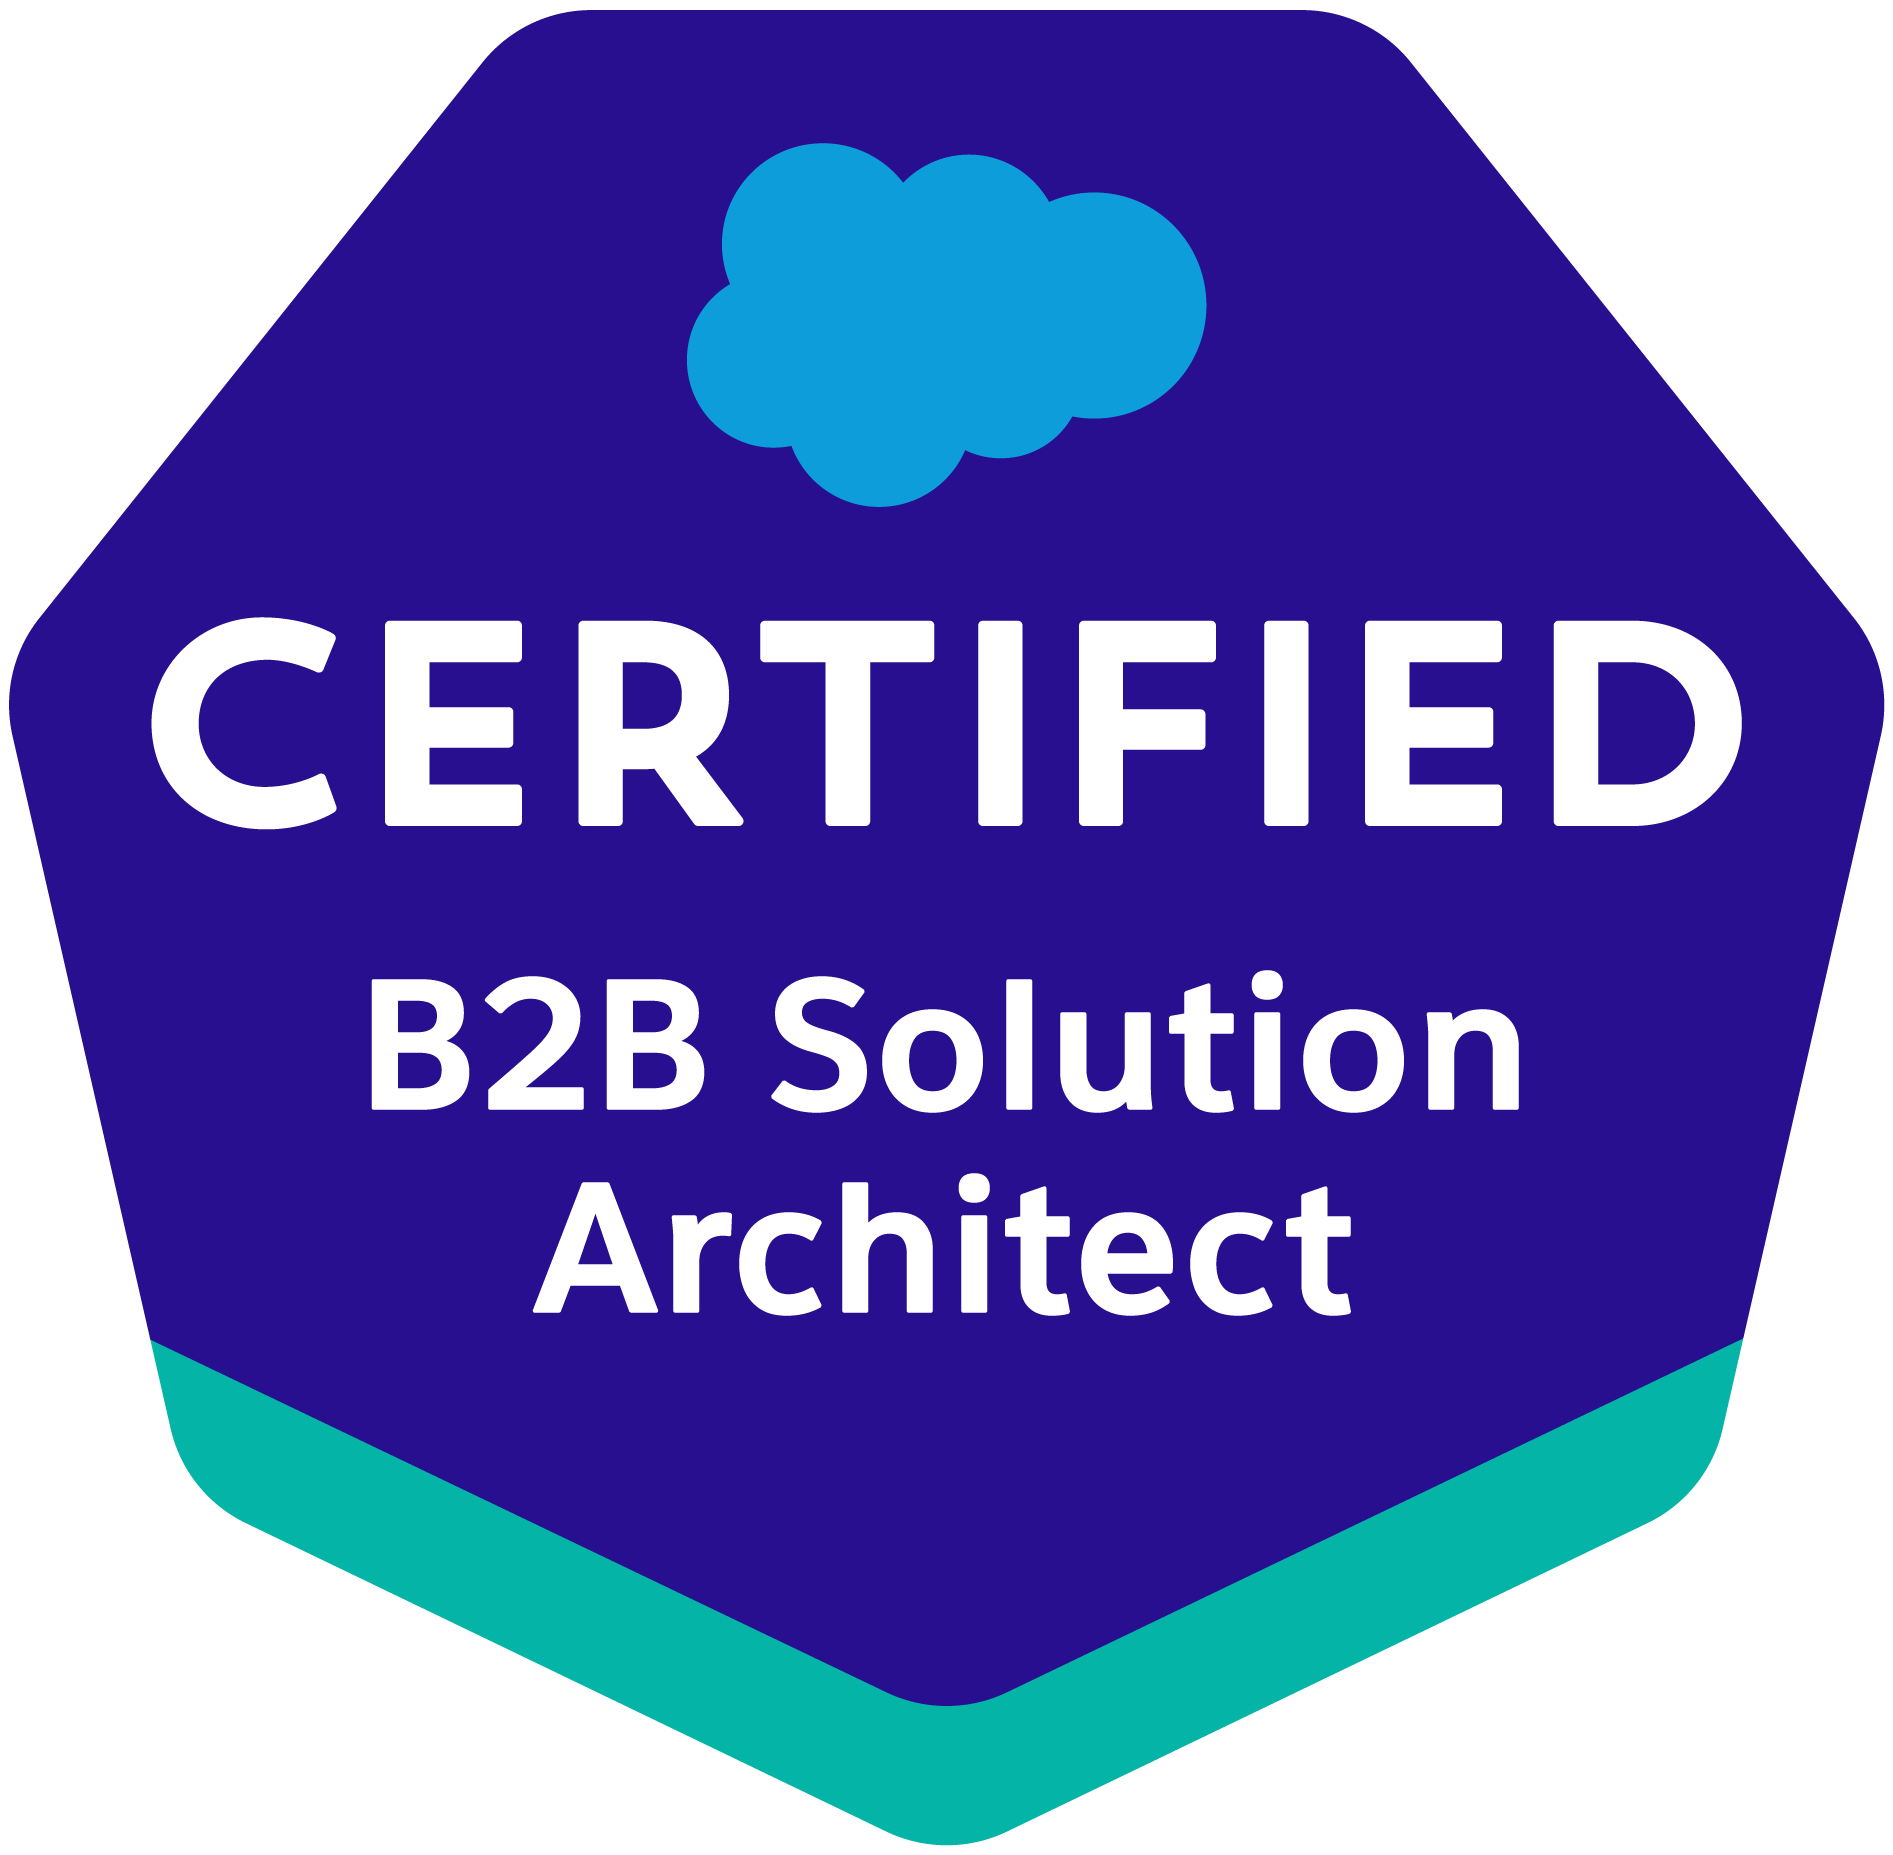 B2B Solution Architect certification